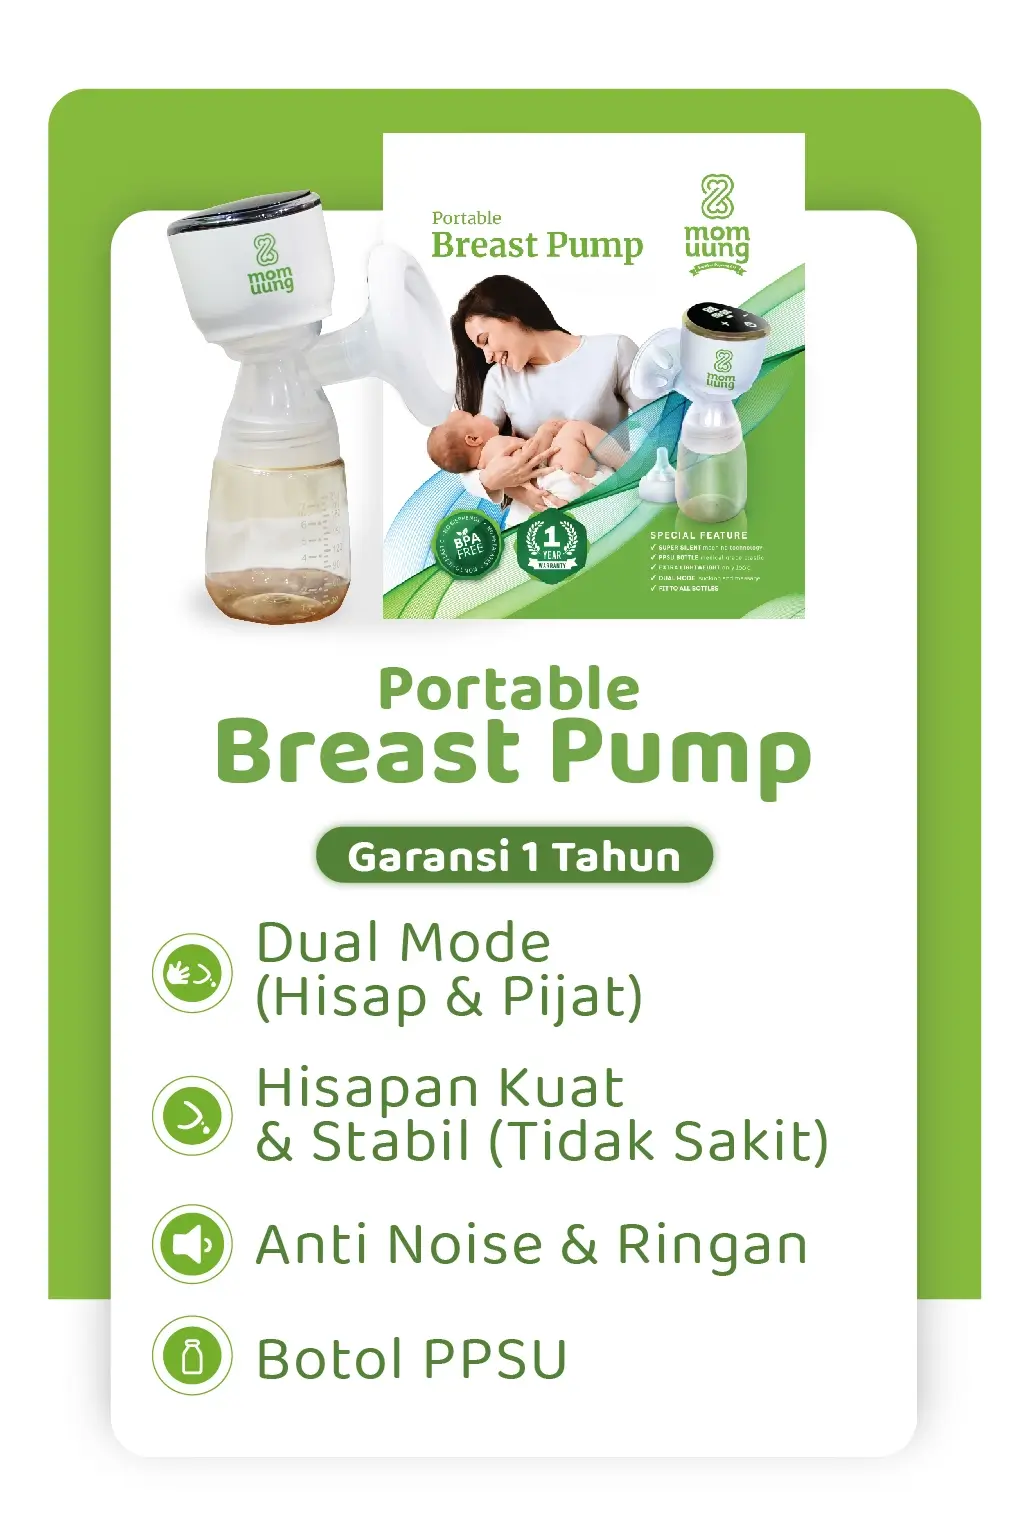 breast pump mom uung